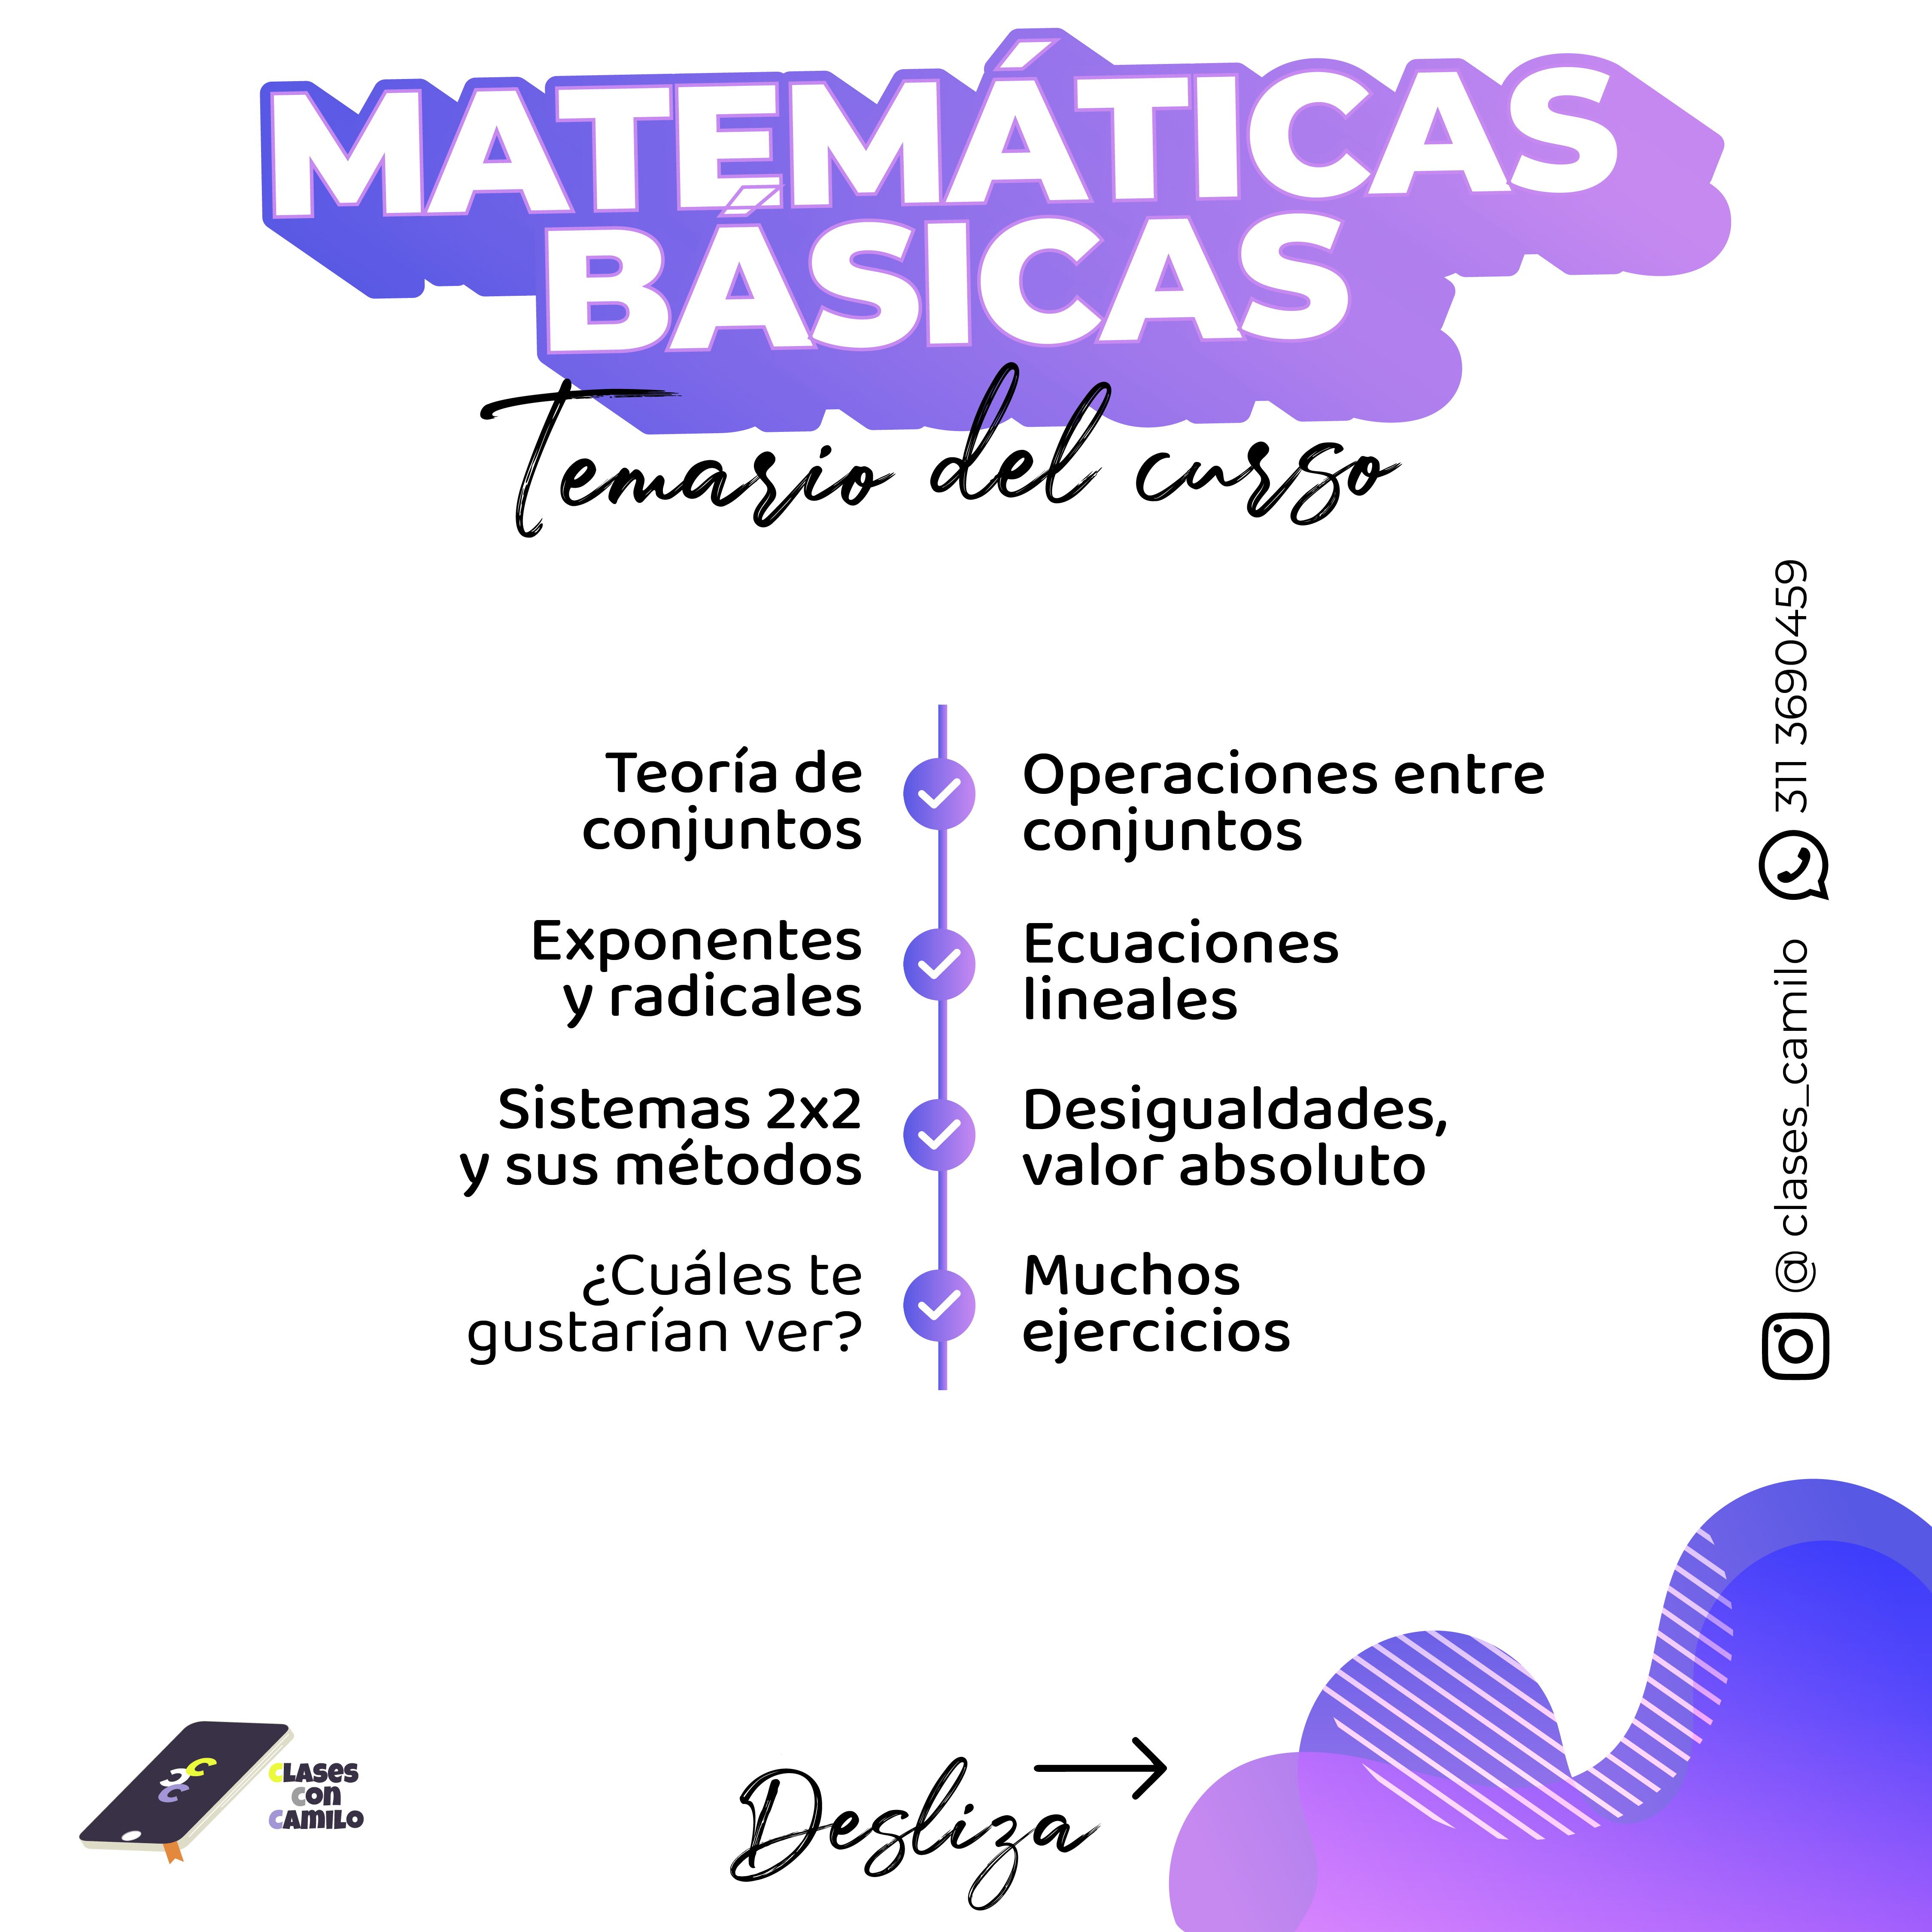 Matematicas basicas